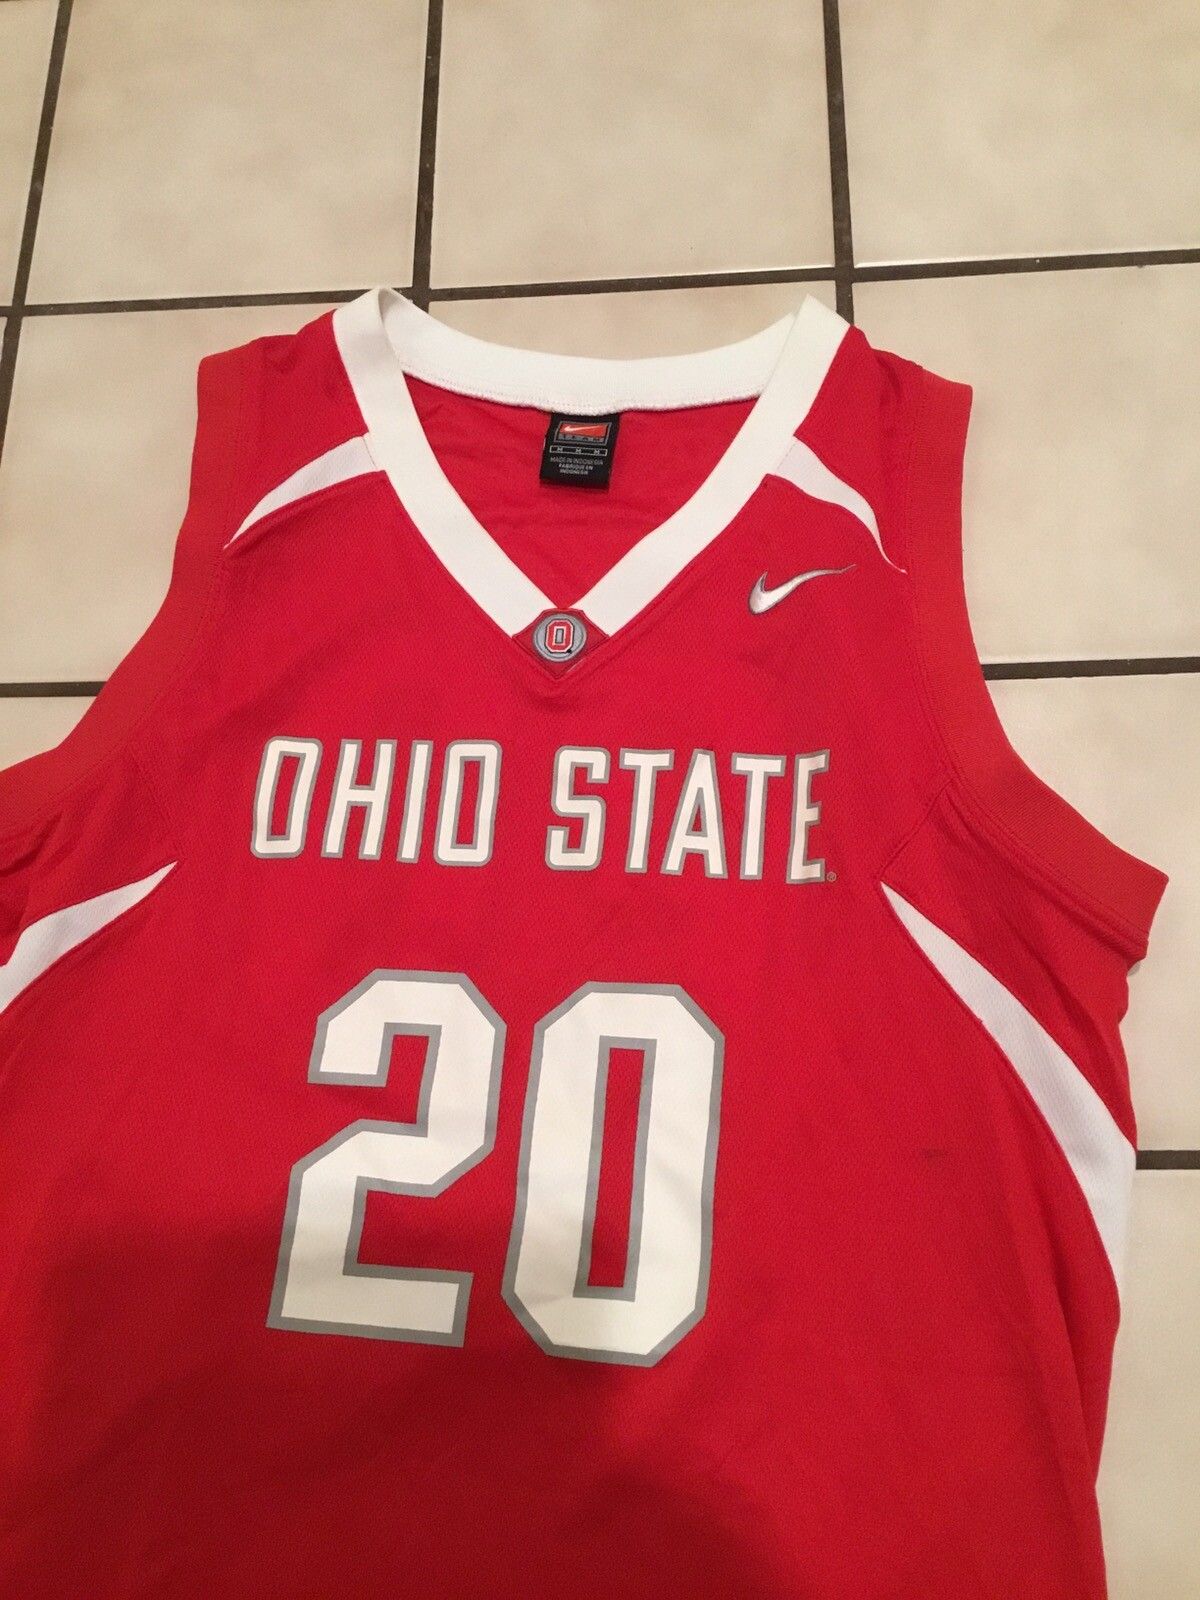 Nike Nike Elite Greg Oden Ohio State Buckeyes Basketball Jersey | Grailed